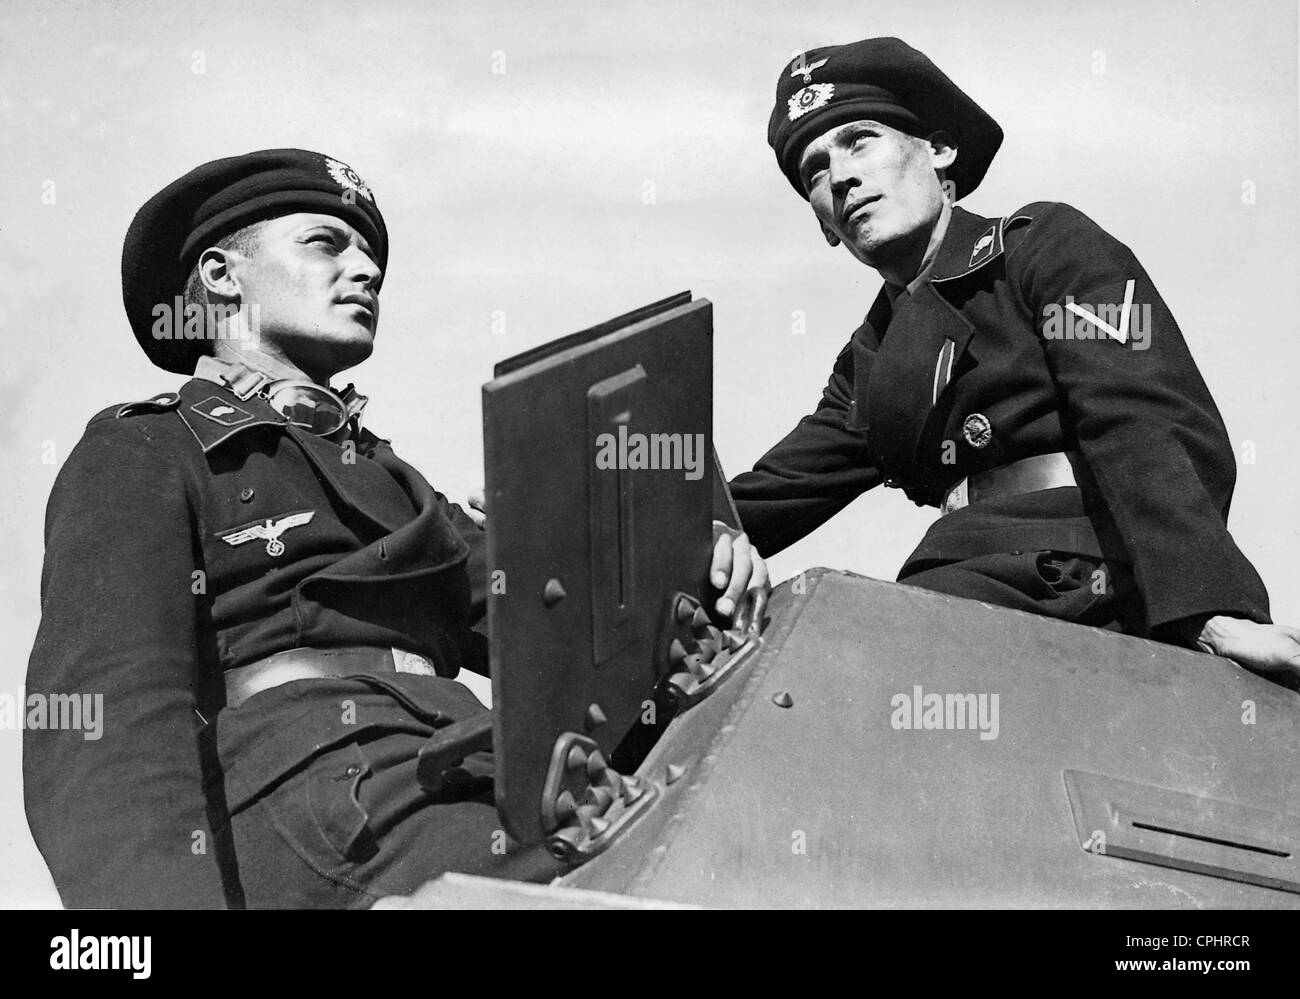 Tank commander and tank gunner, 1940 Stock Photo